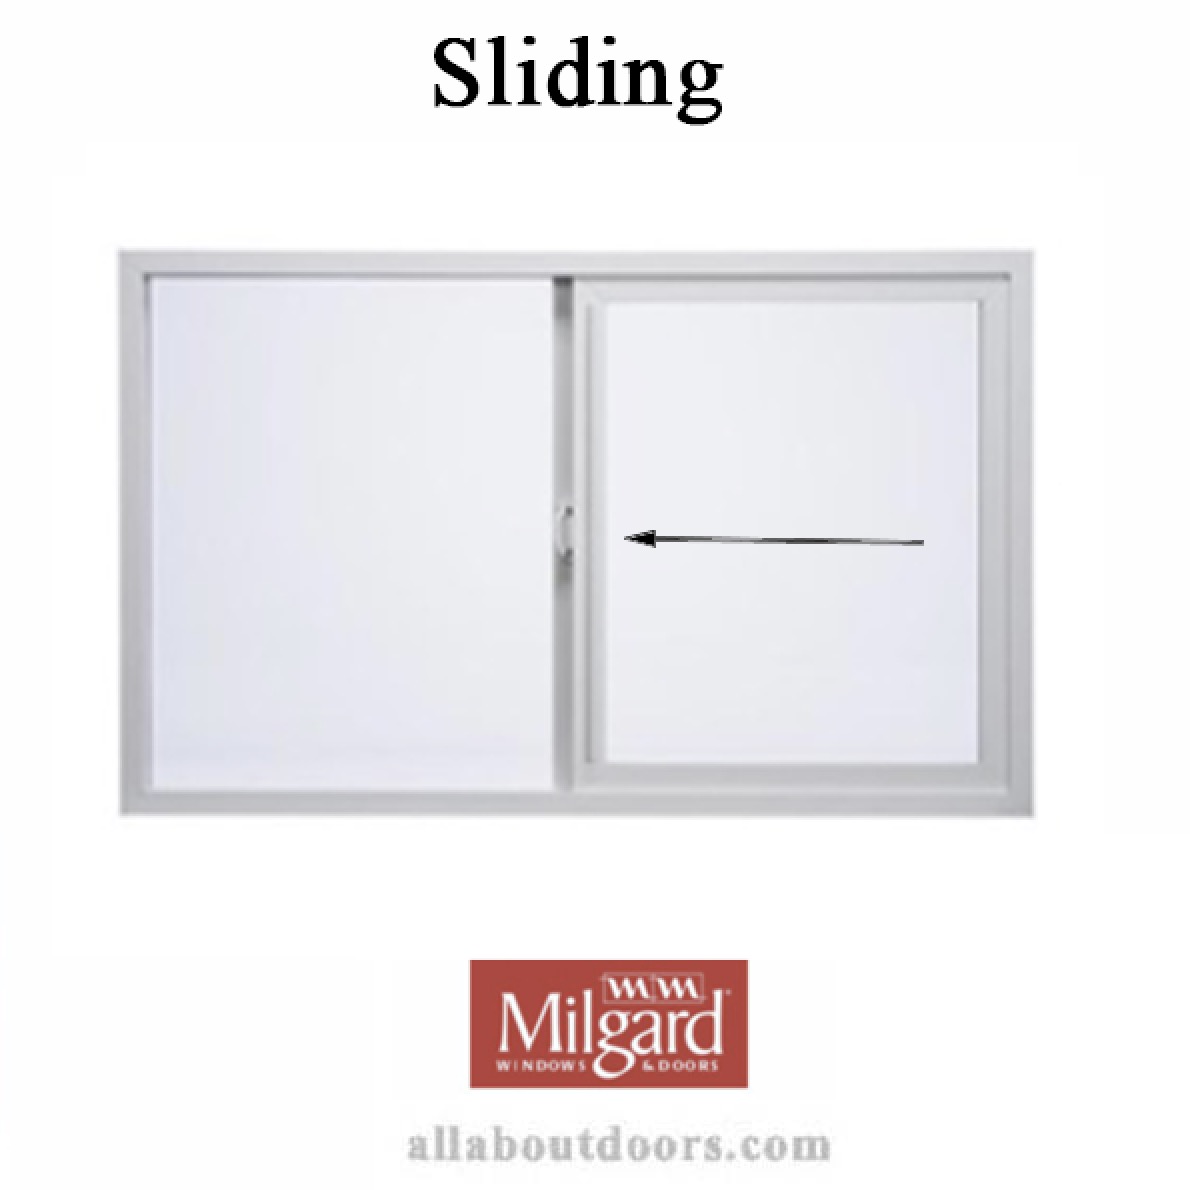 Milgard Sliding Window Hardware